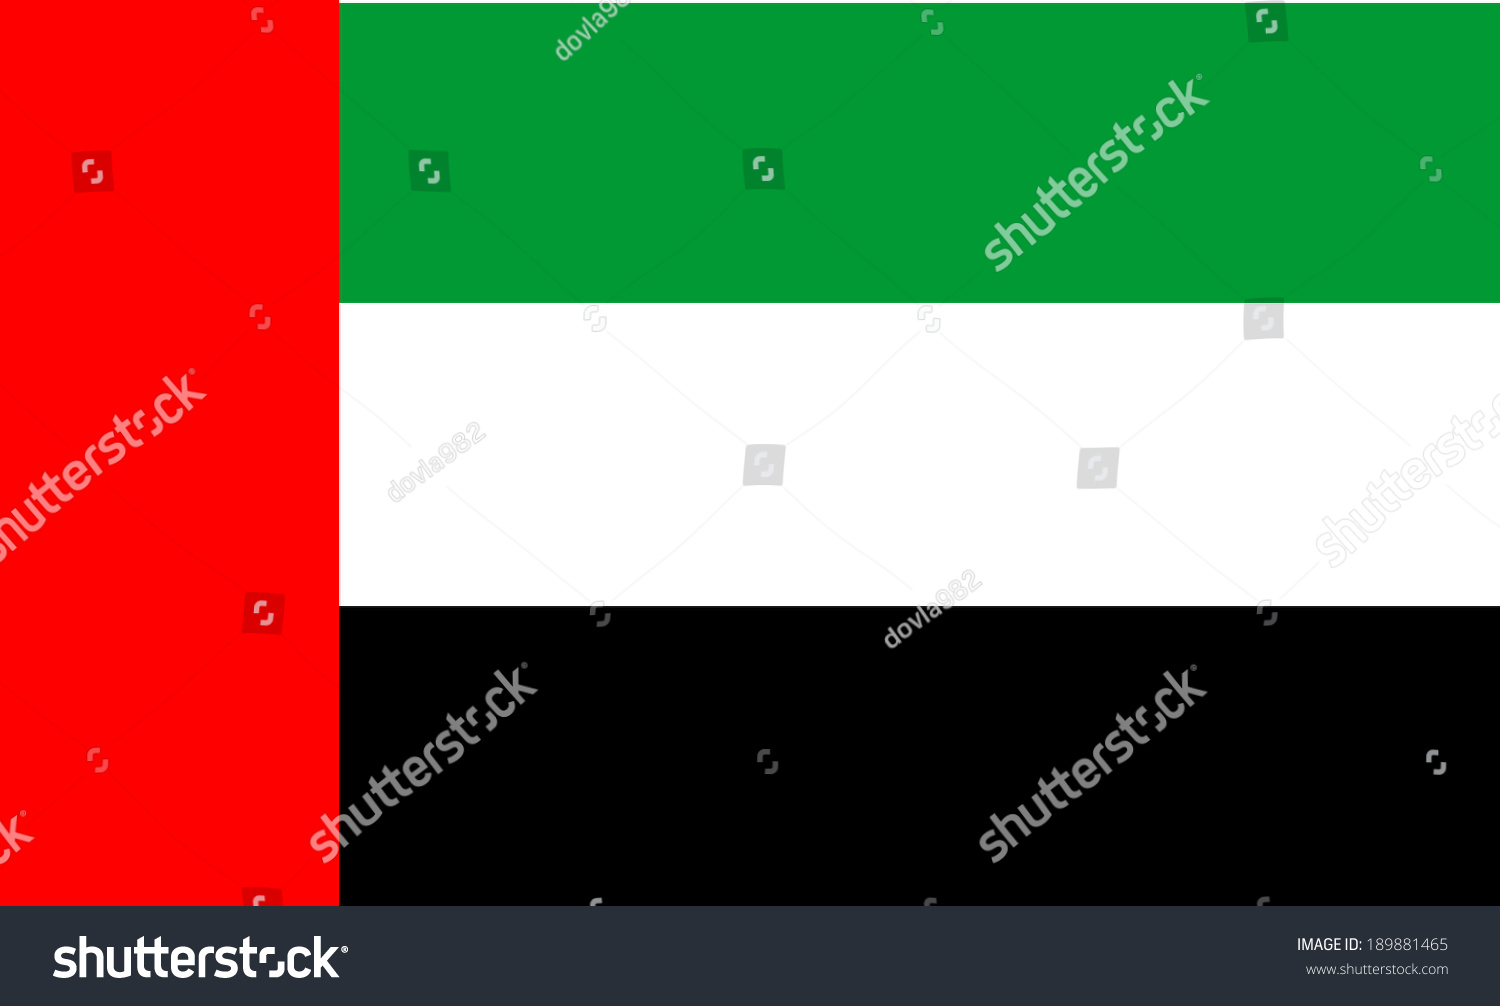 SVG of United Arab Emirates flag vector illustration isolated on background. Patriotic national emblem. Proud symbol of UAE. Middle East country. svg